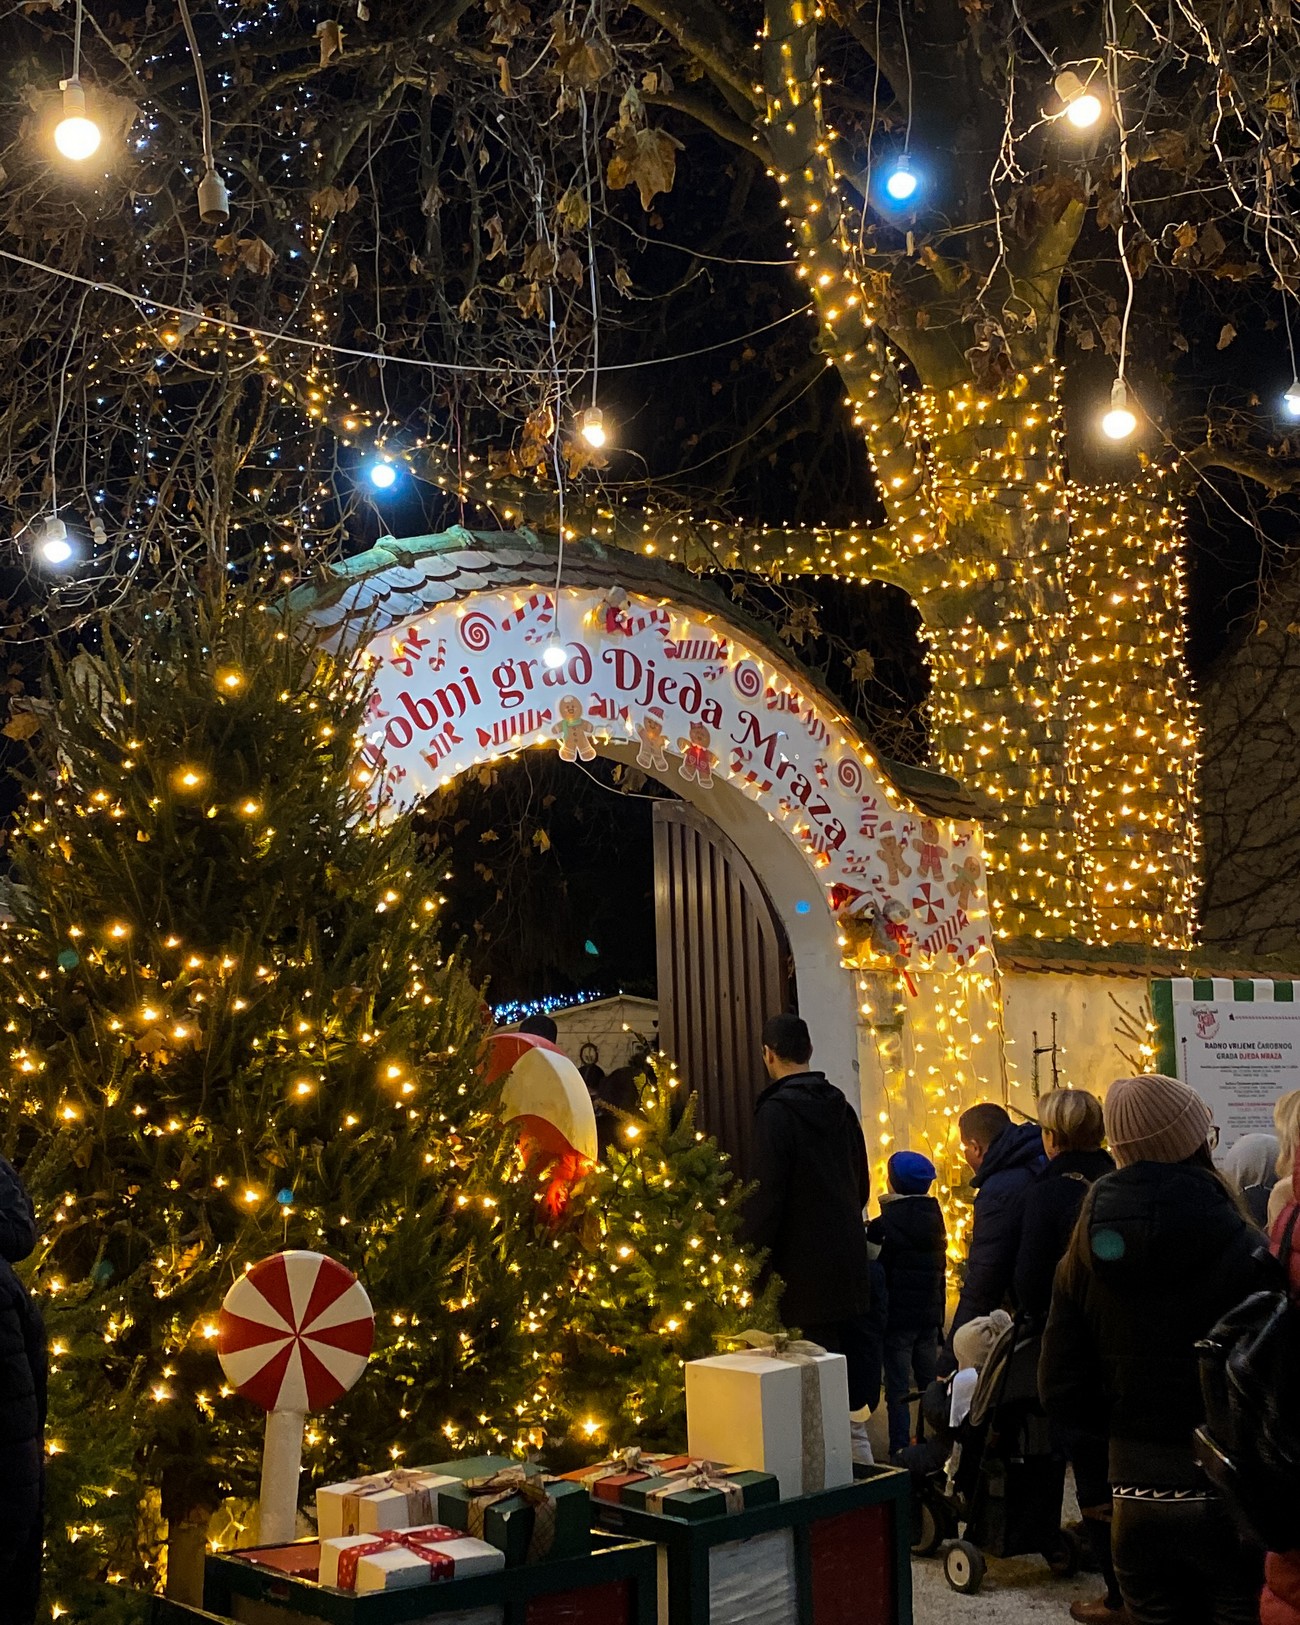 The Most Beautiful Christmas Market in Varaždin, Croatia